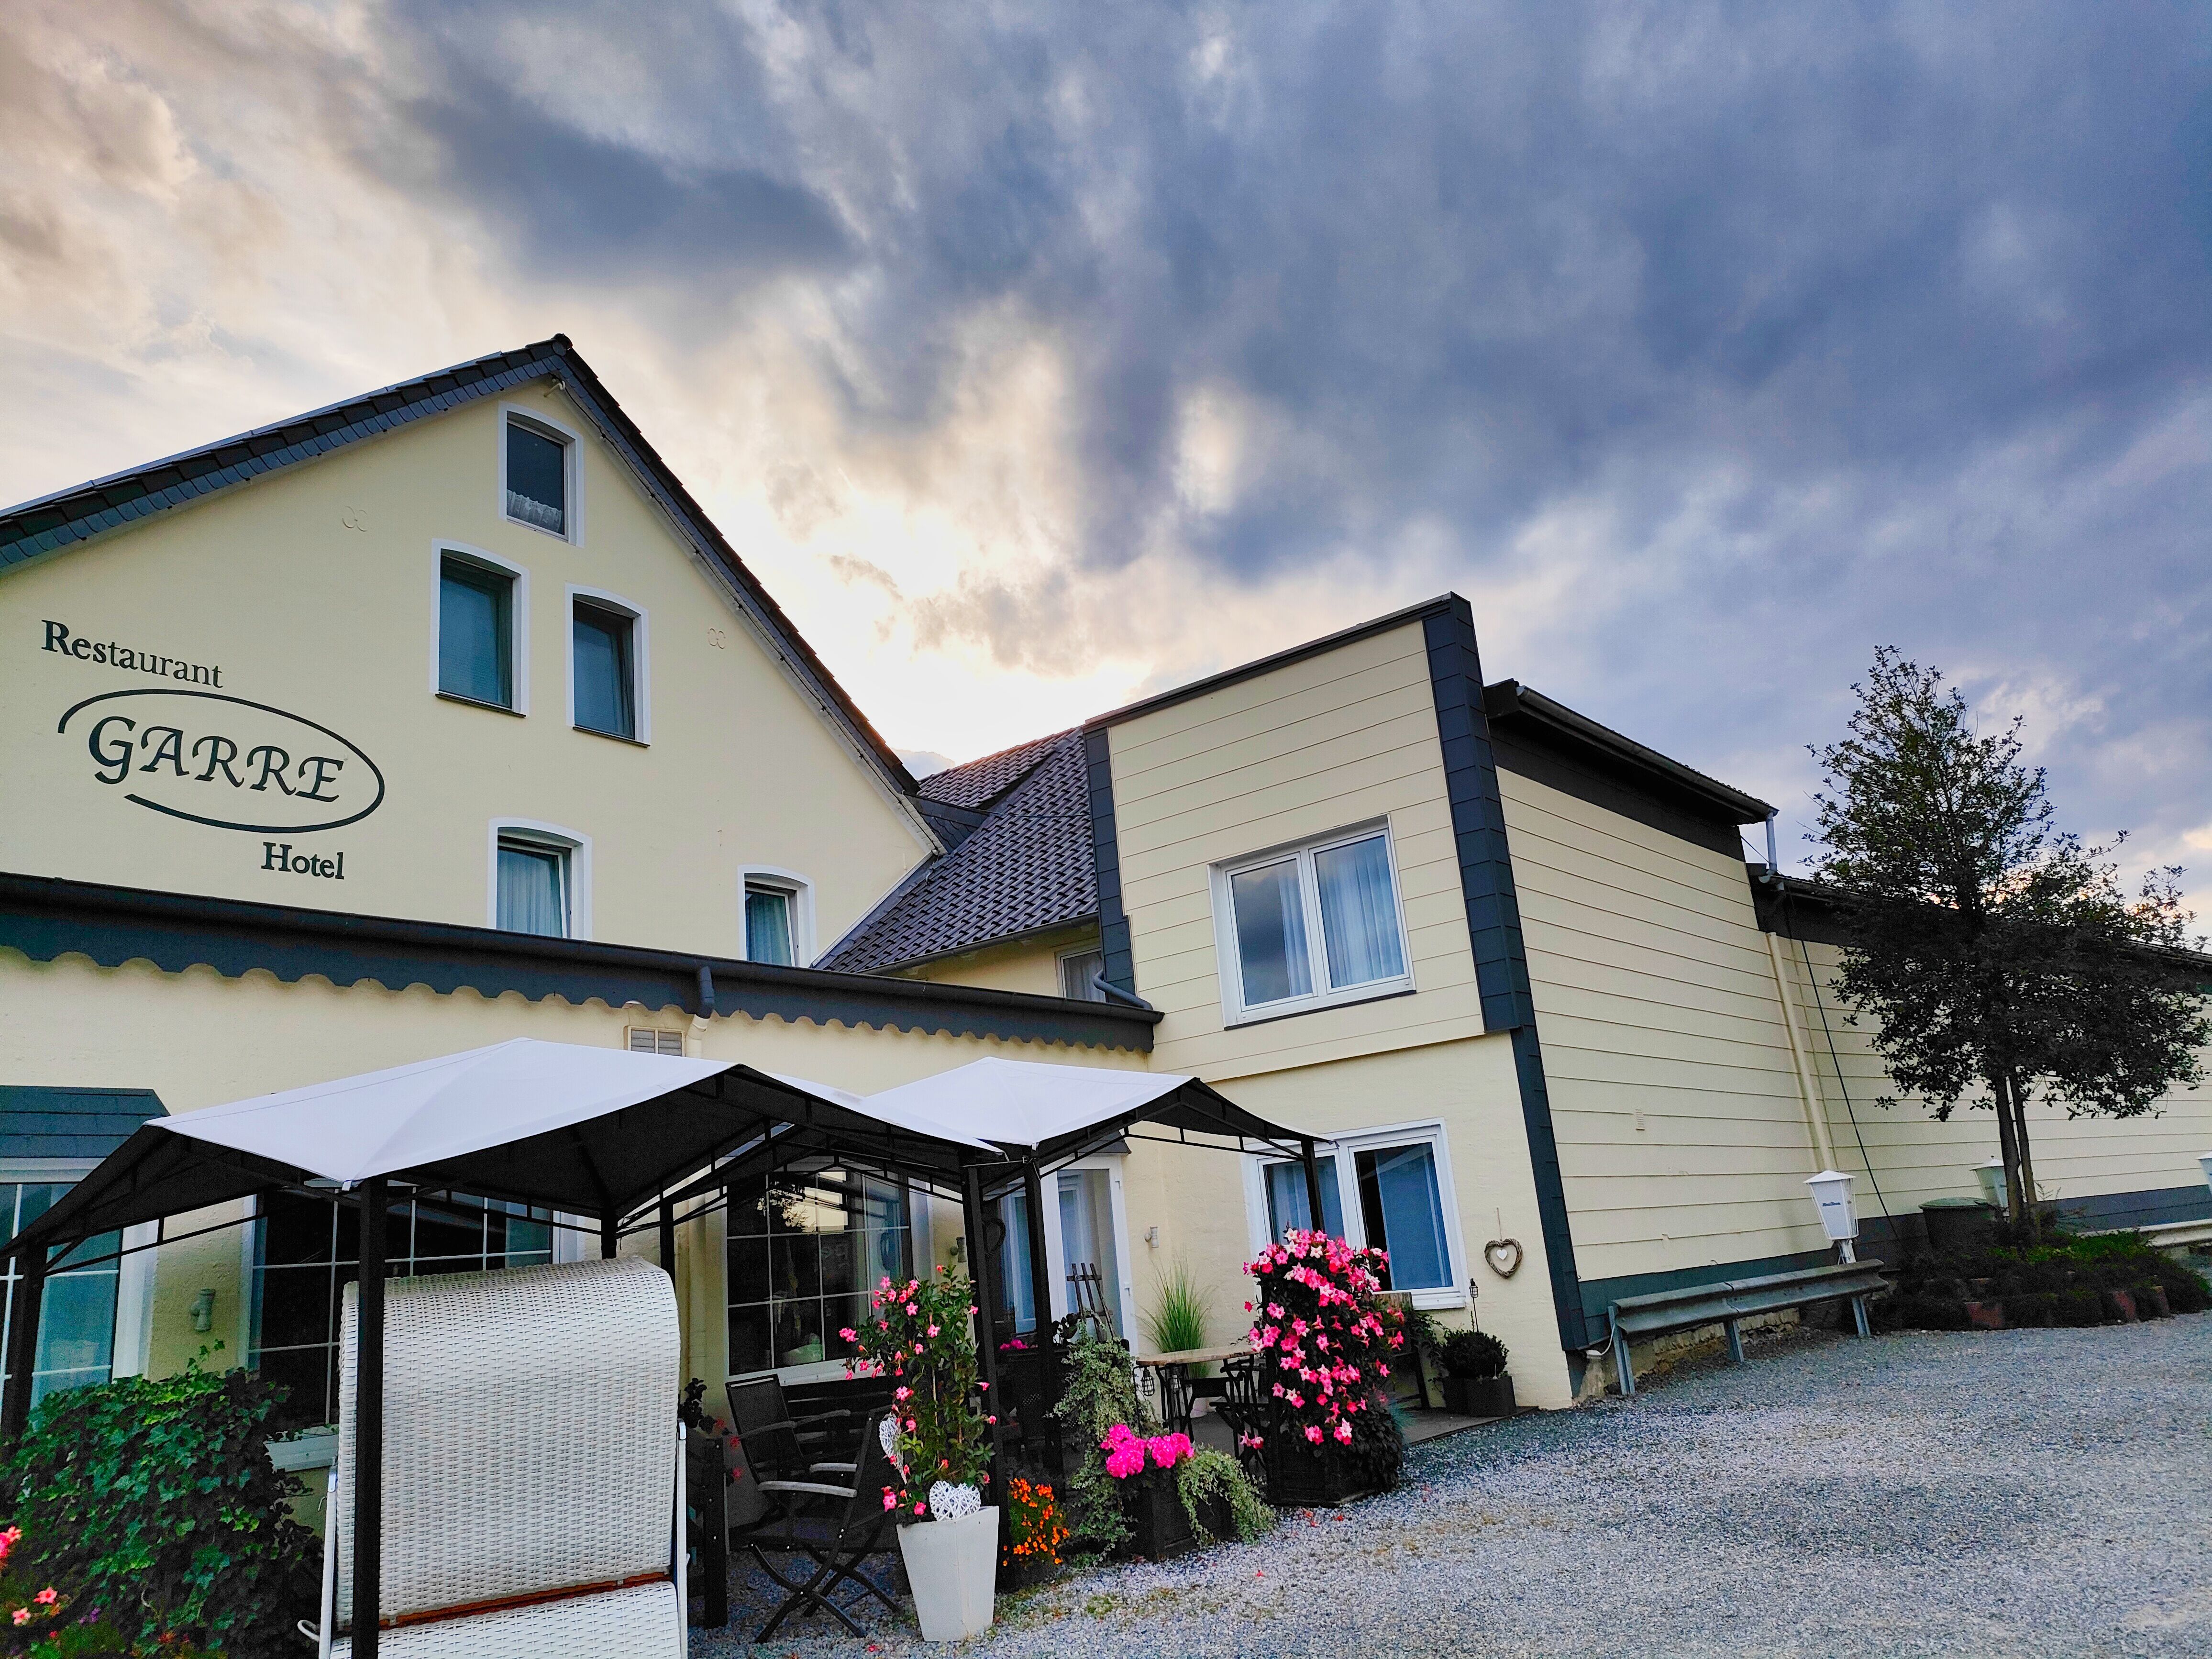 Hotel Restaurant Garre, Horn-Bad Meinberg.
